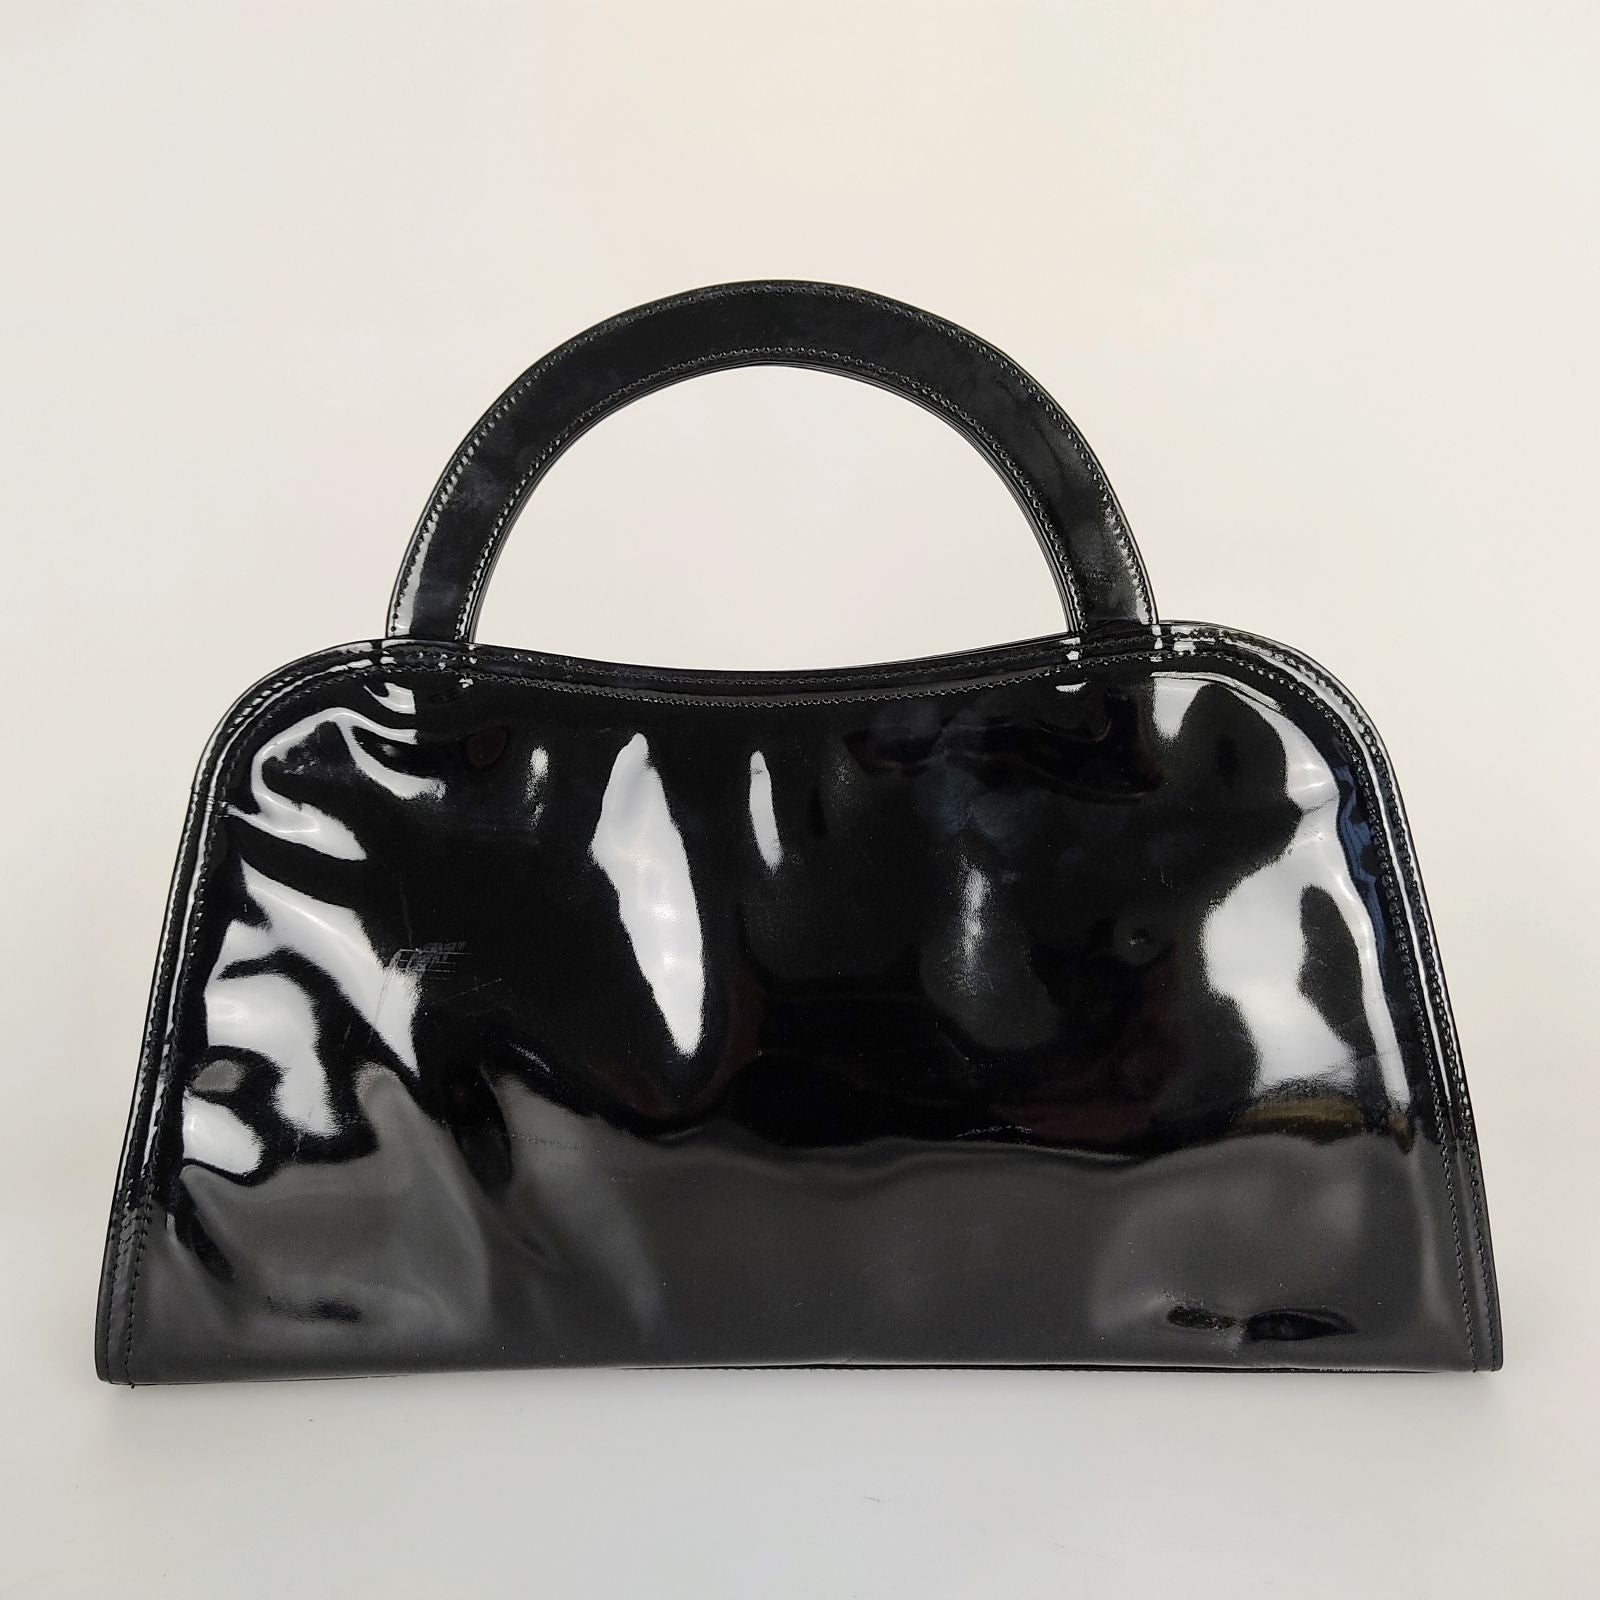 Fendi Fendi vintage handbag in black patent leather - '10s